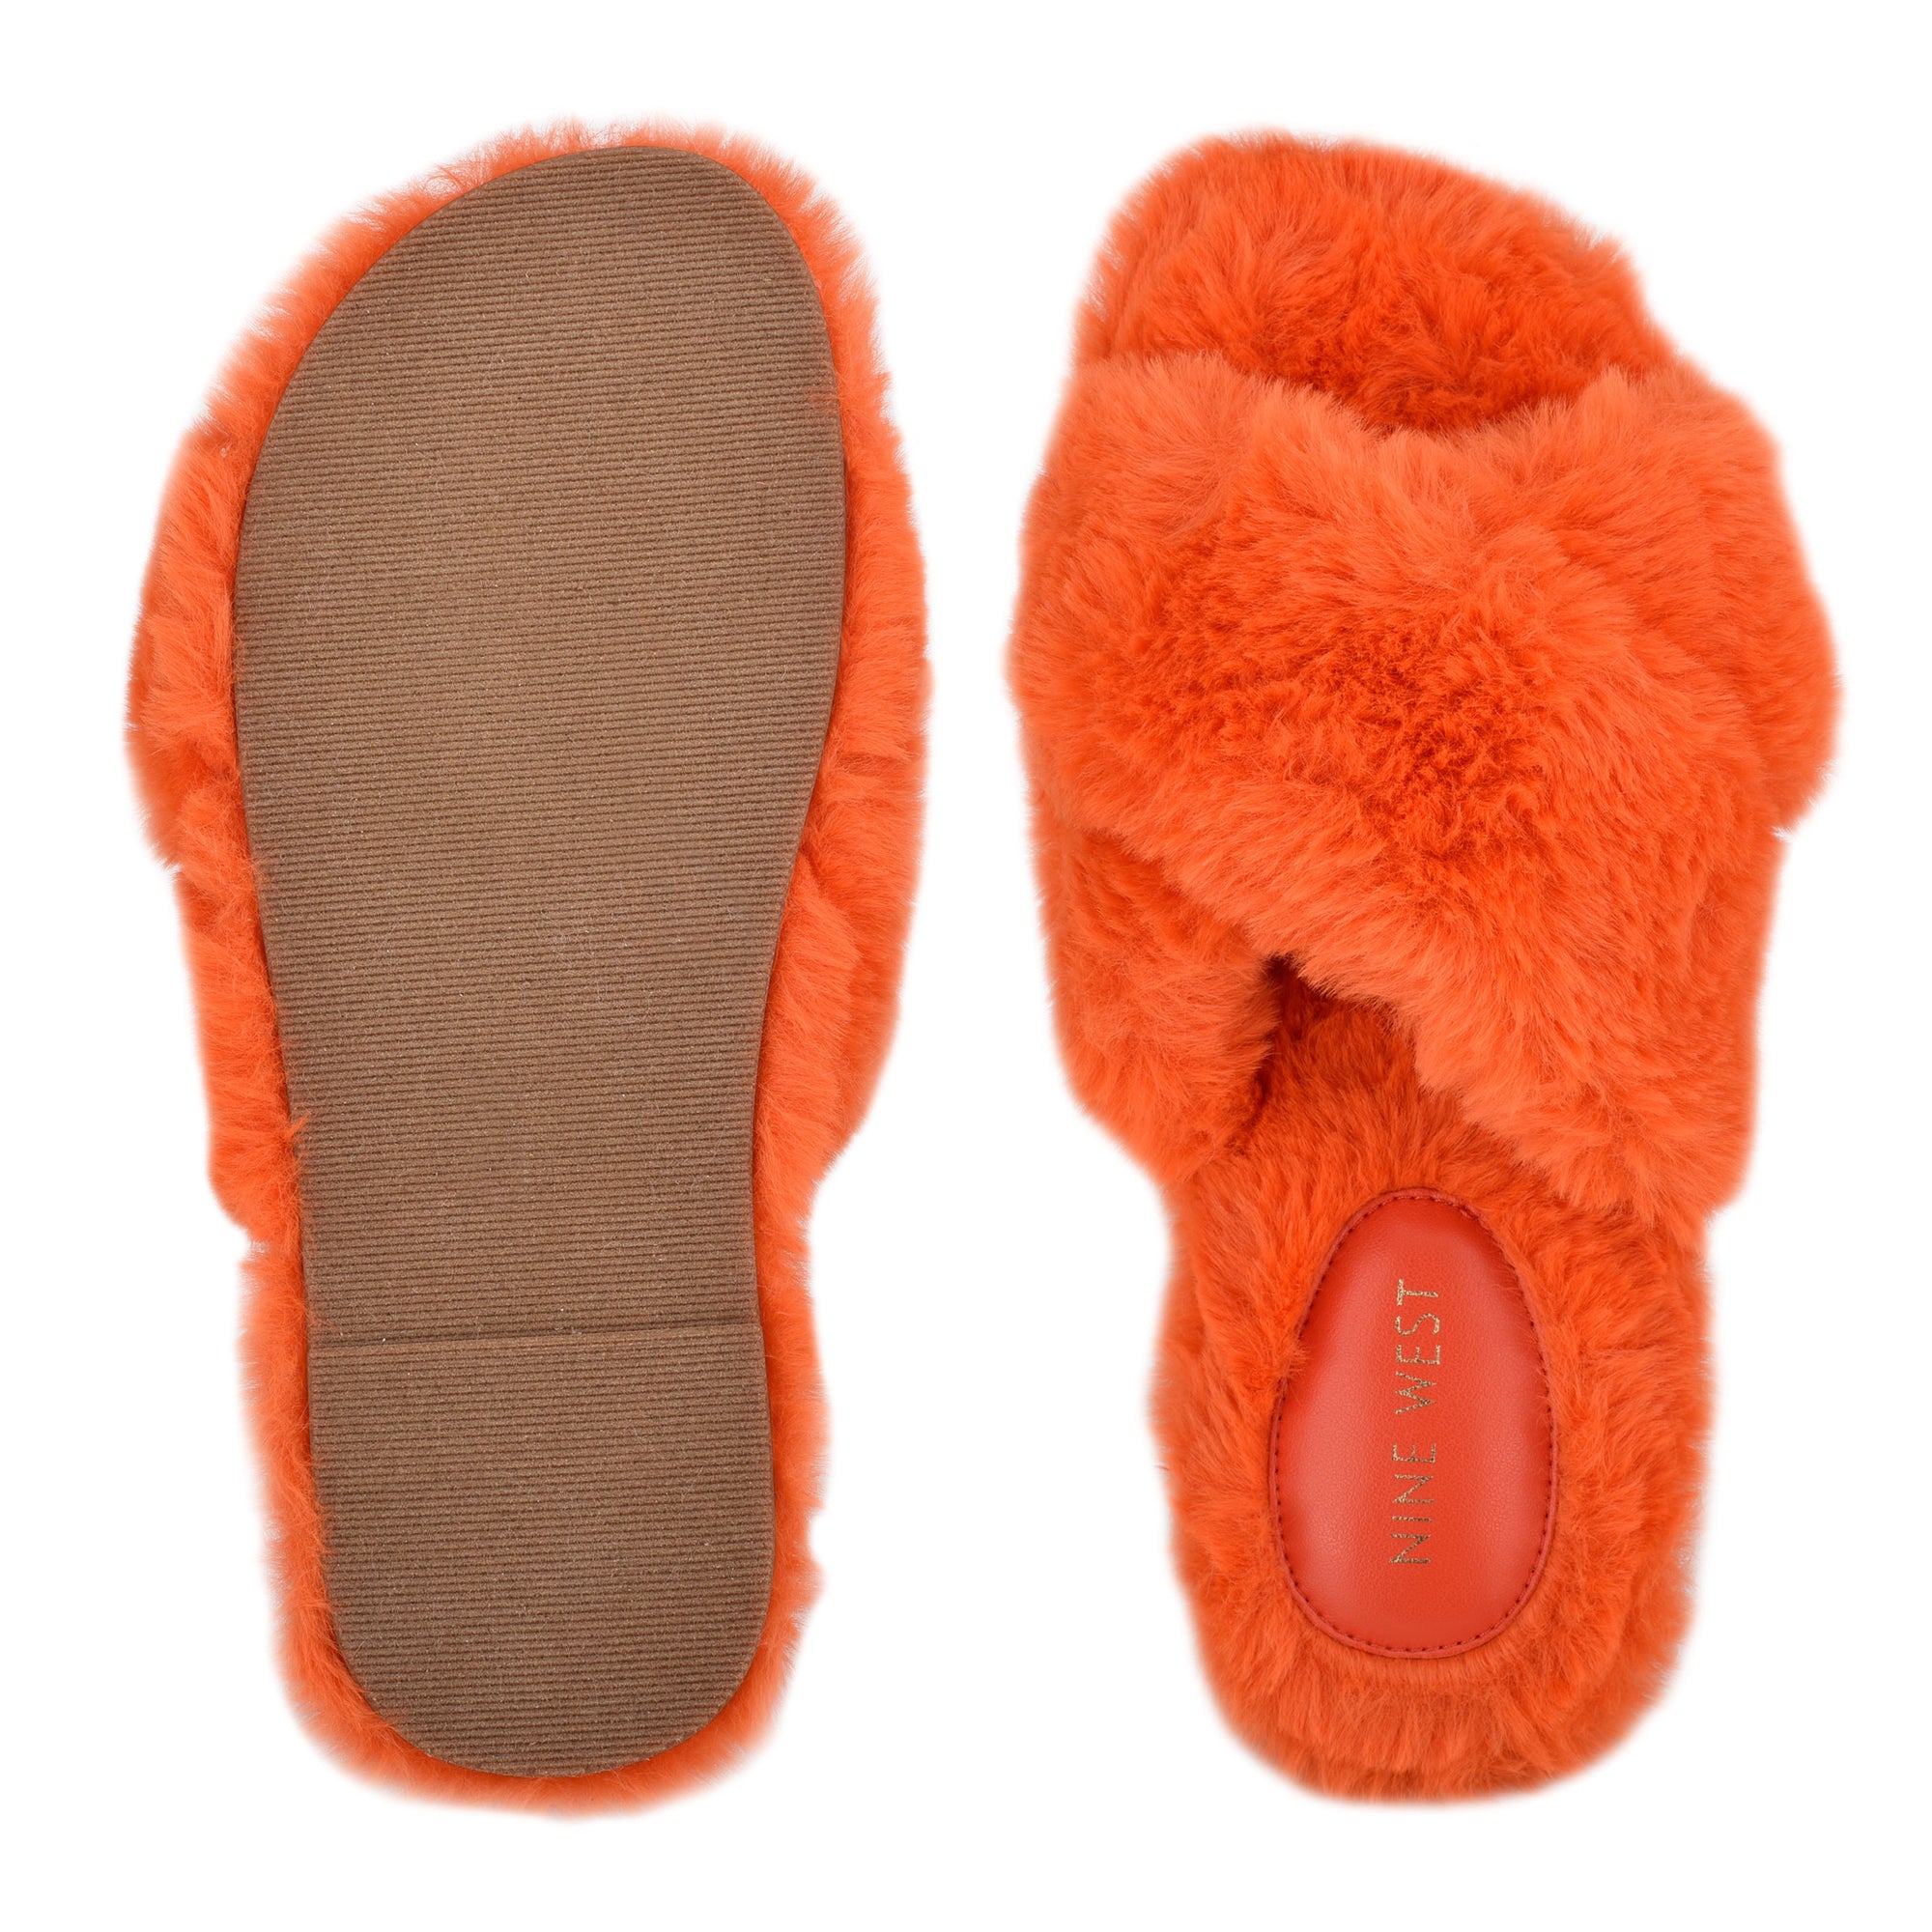 bunny slippers amazon